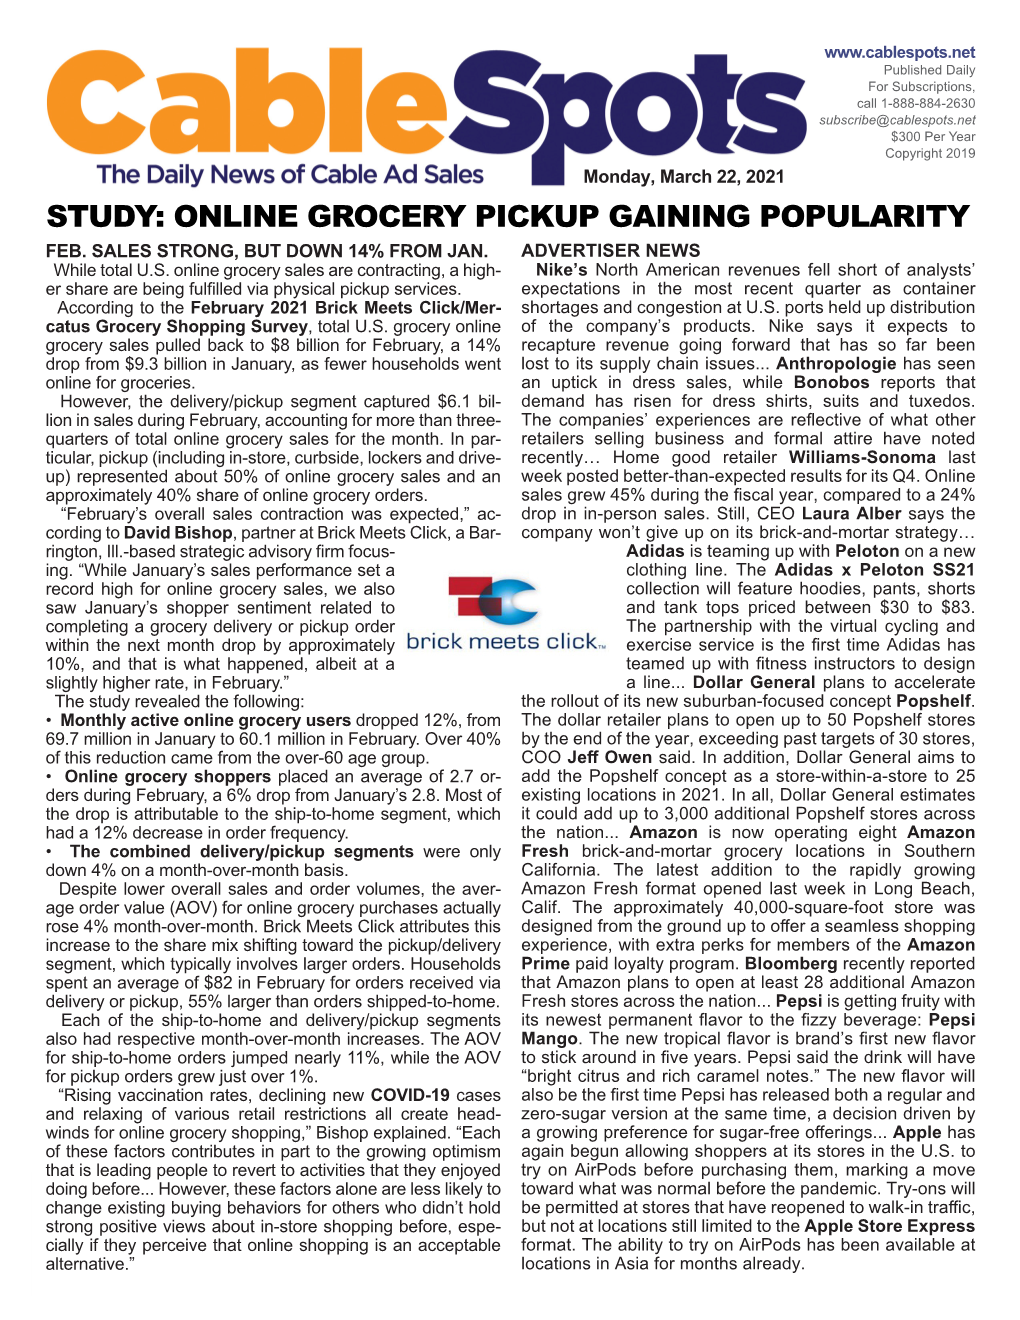 Online Grocery Pickup Gaining Popularity Feb